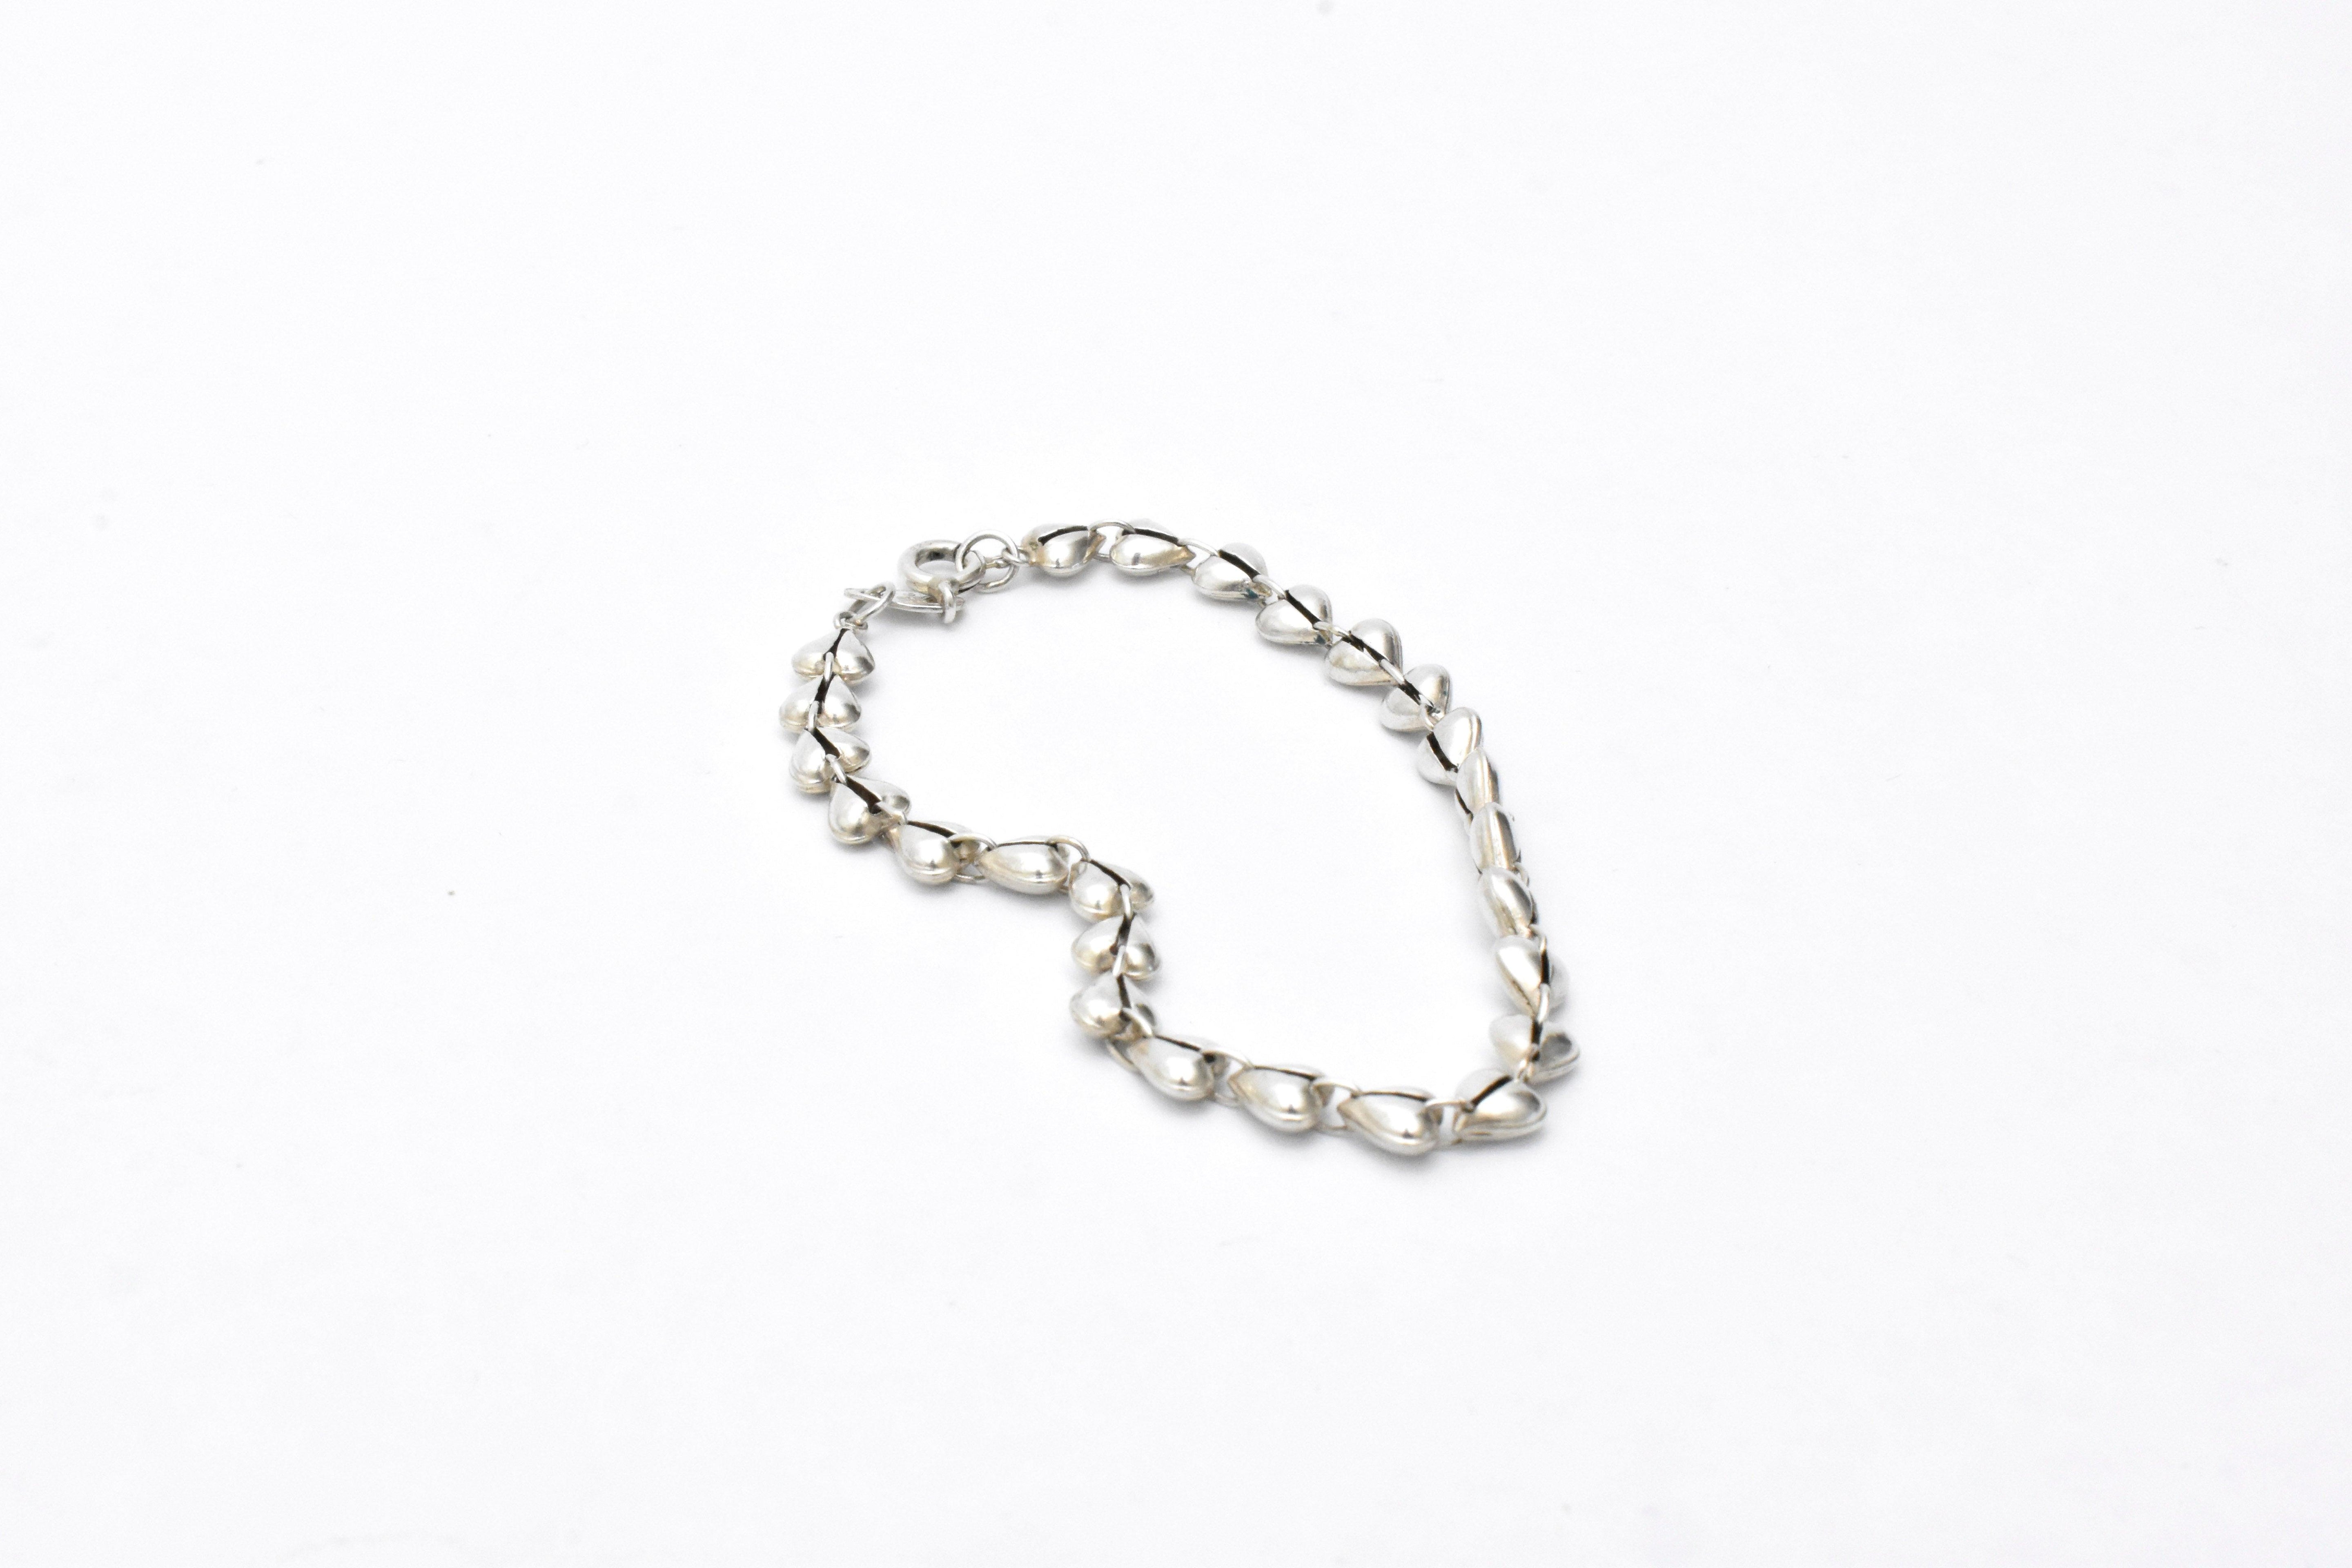 Vintage Sterling Silver Puffy Heart Bracelet #208 - APORTA Shop